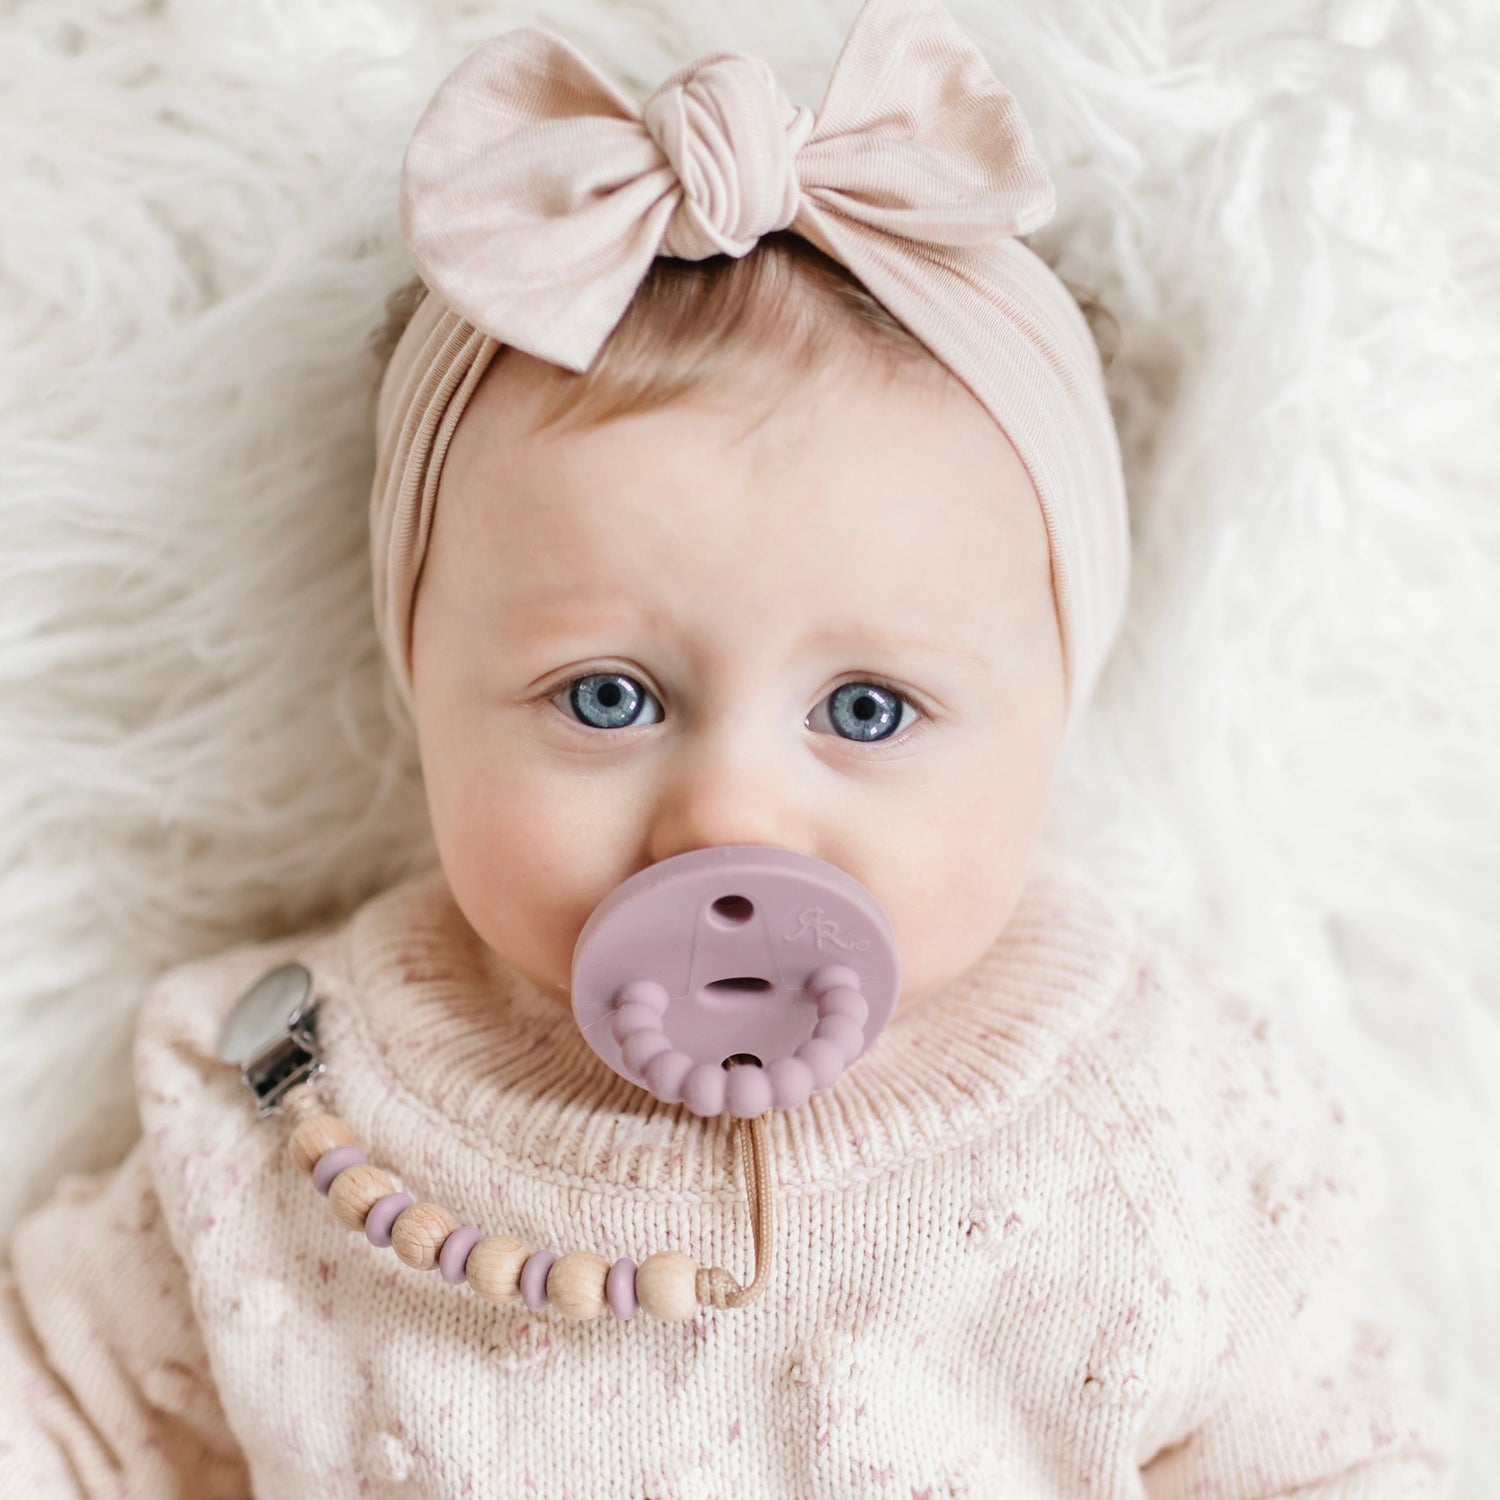 Baby girl wearing a Wisteria Cutie PAT and Ella Cutie Clip.